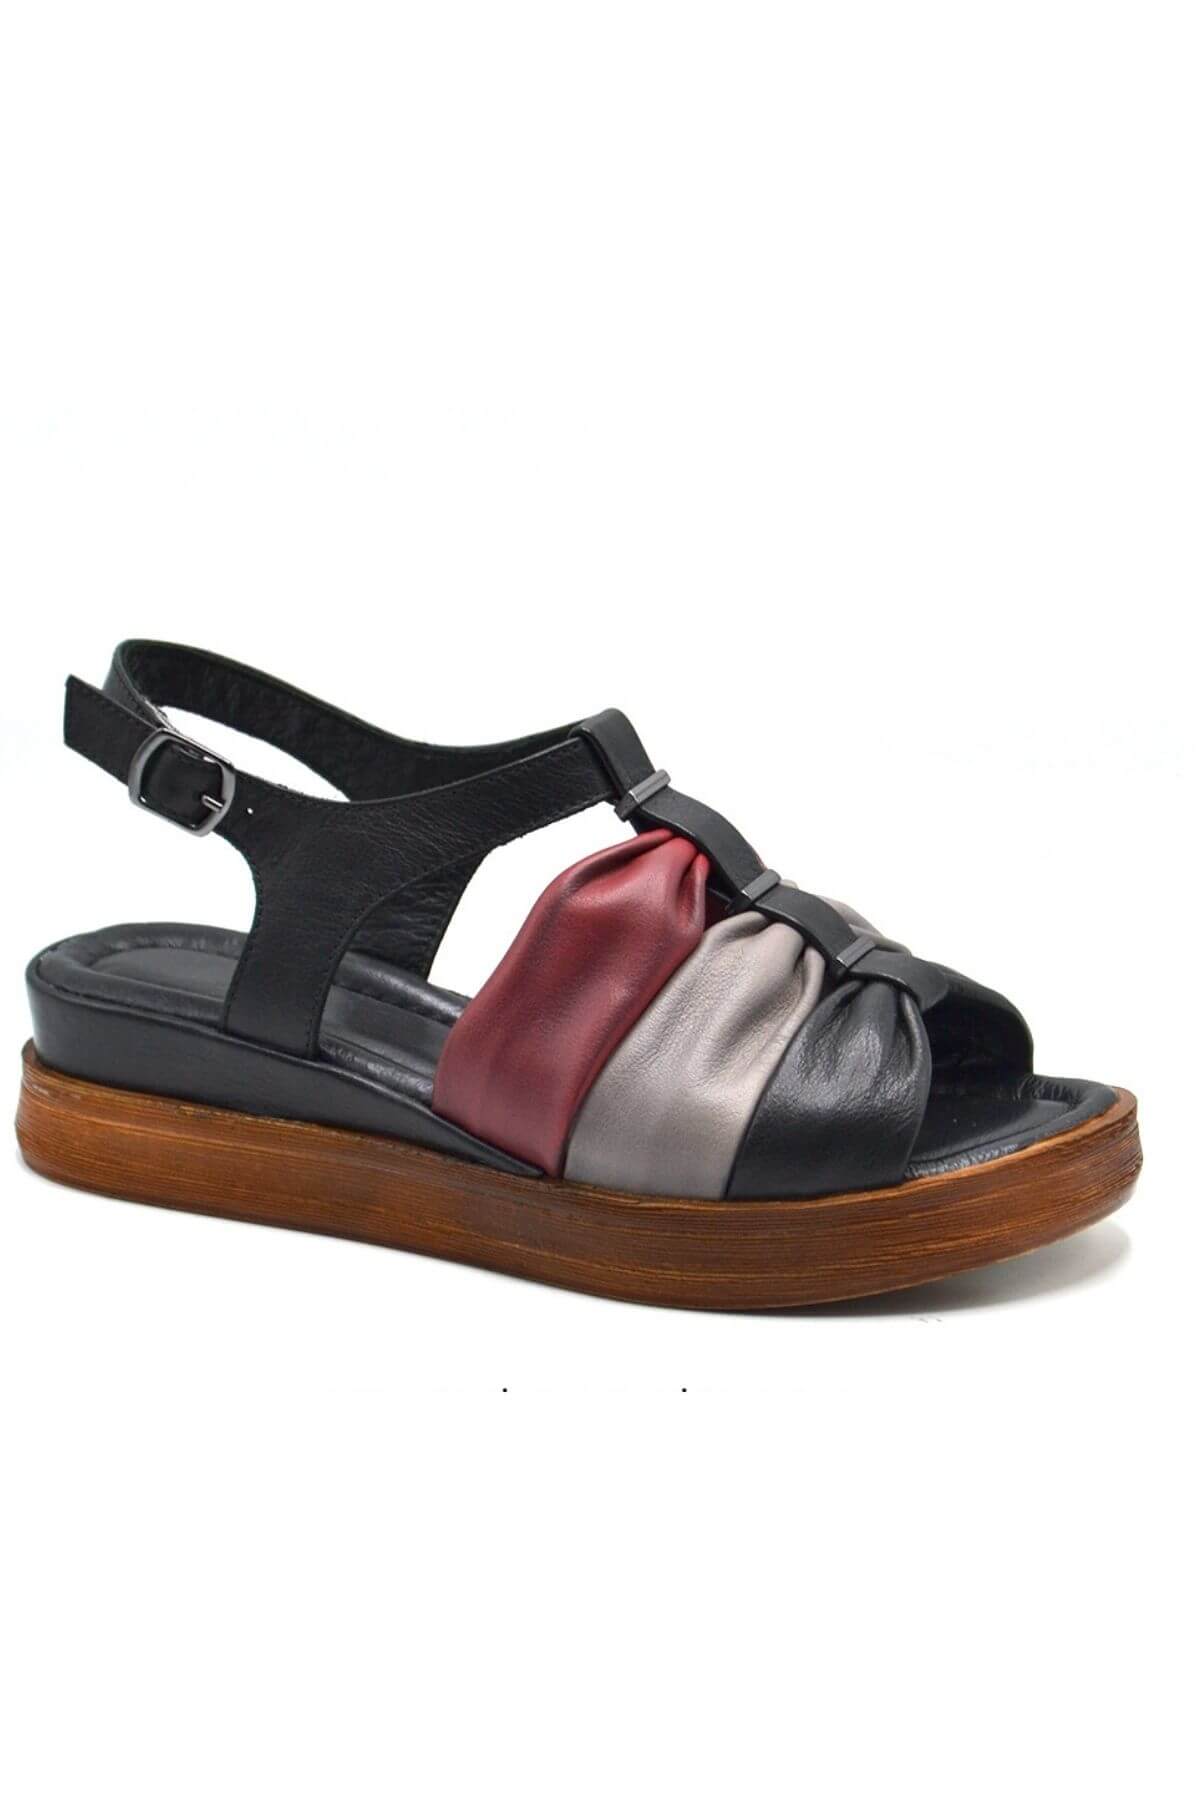 Kadın Comfort Deri Sandalet Siyah 2216412Y - Thumbnail